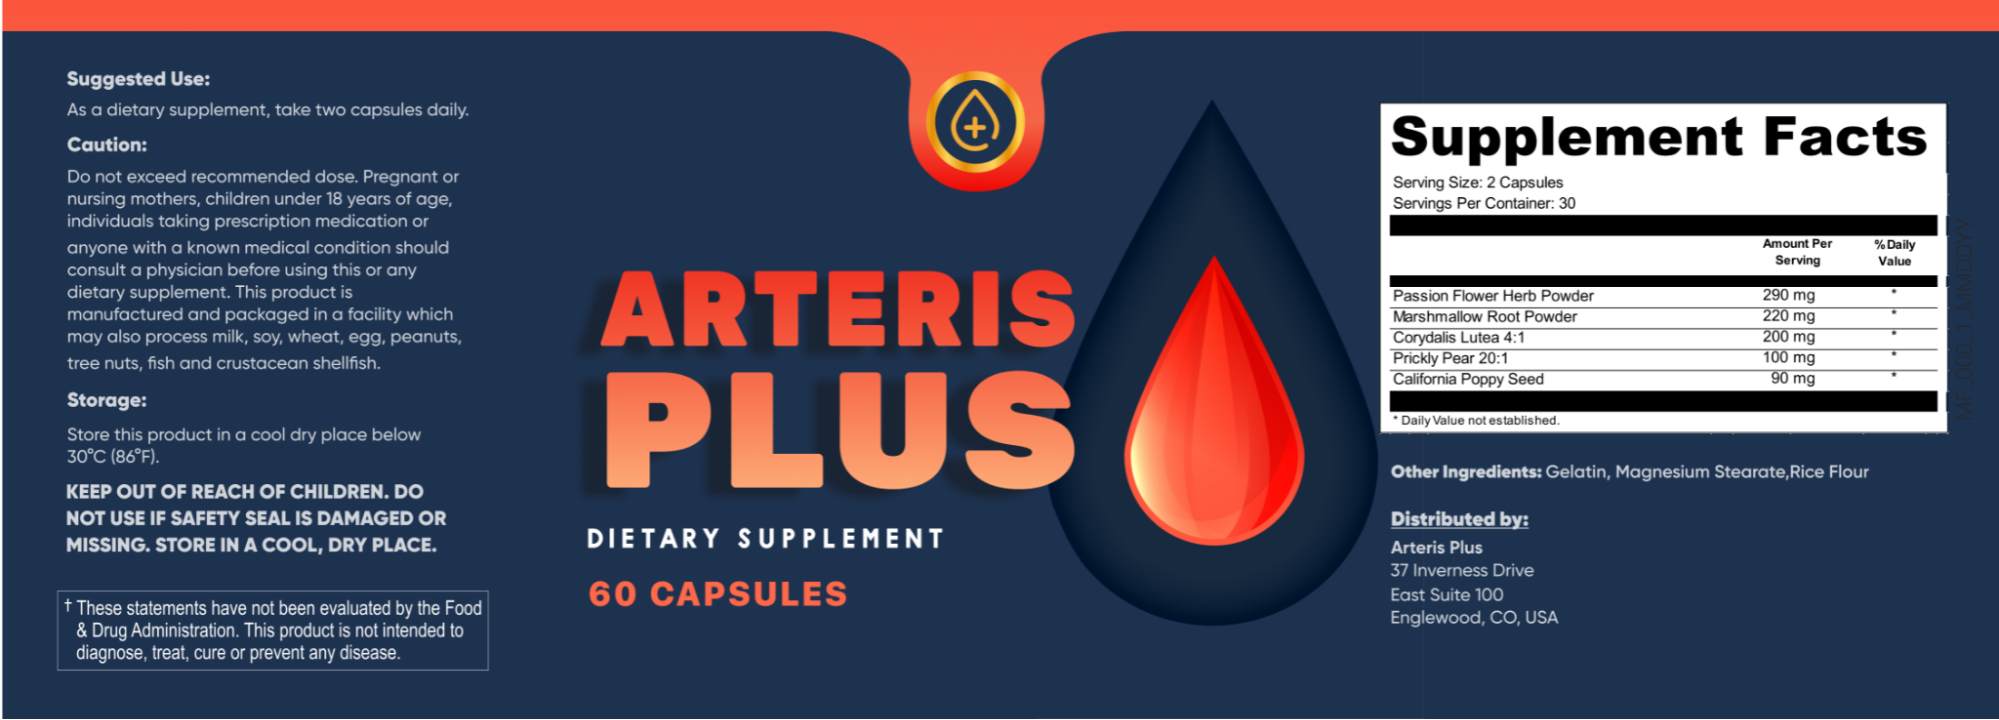 Arteris Plus Supplement Facts